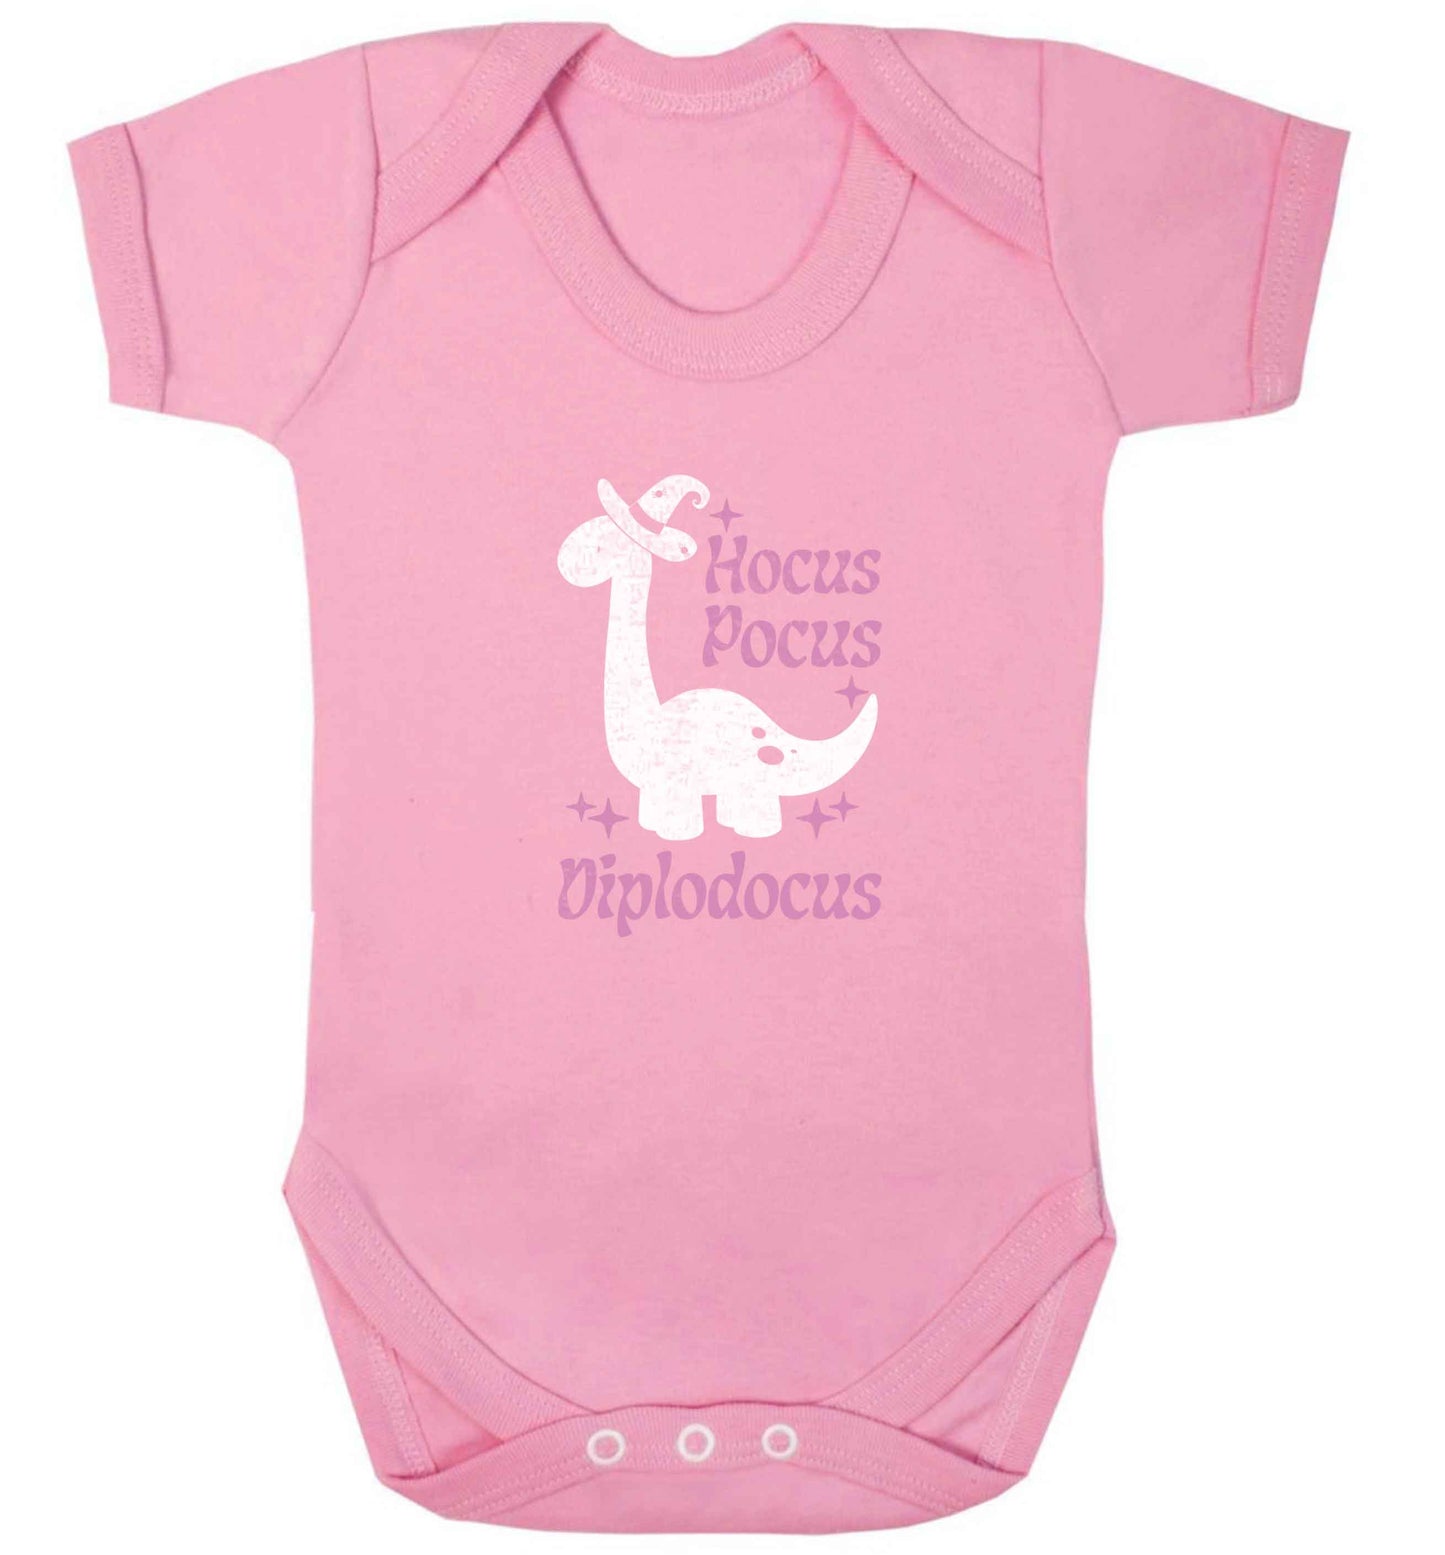 Hocus pocus diplodocus Kit baby vest pale pink 18-24 months